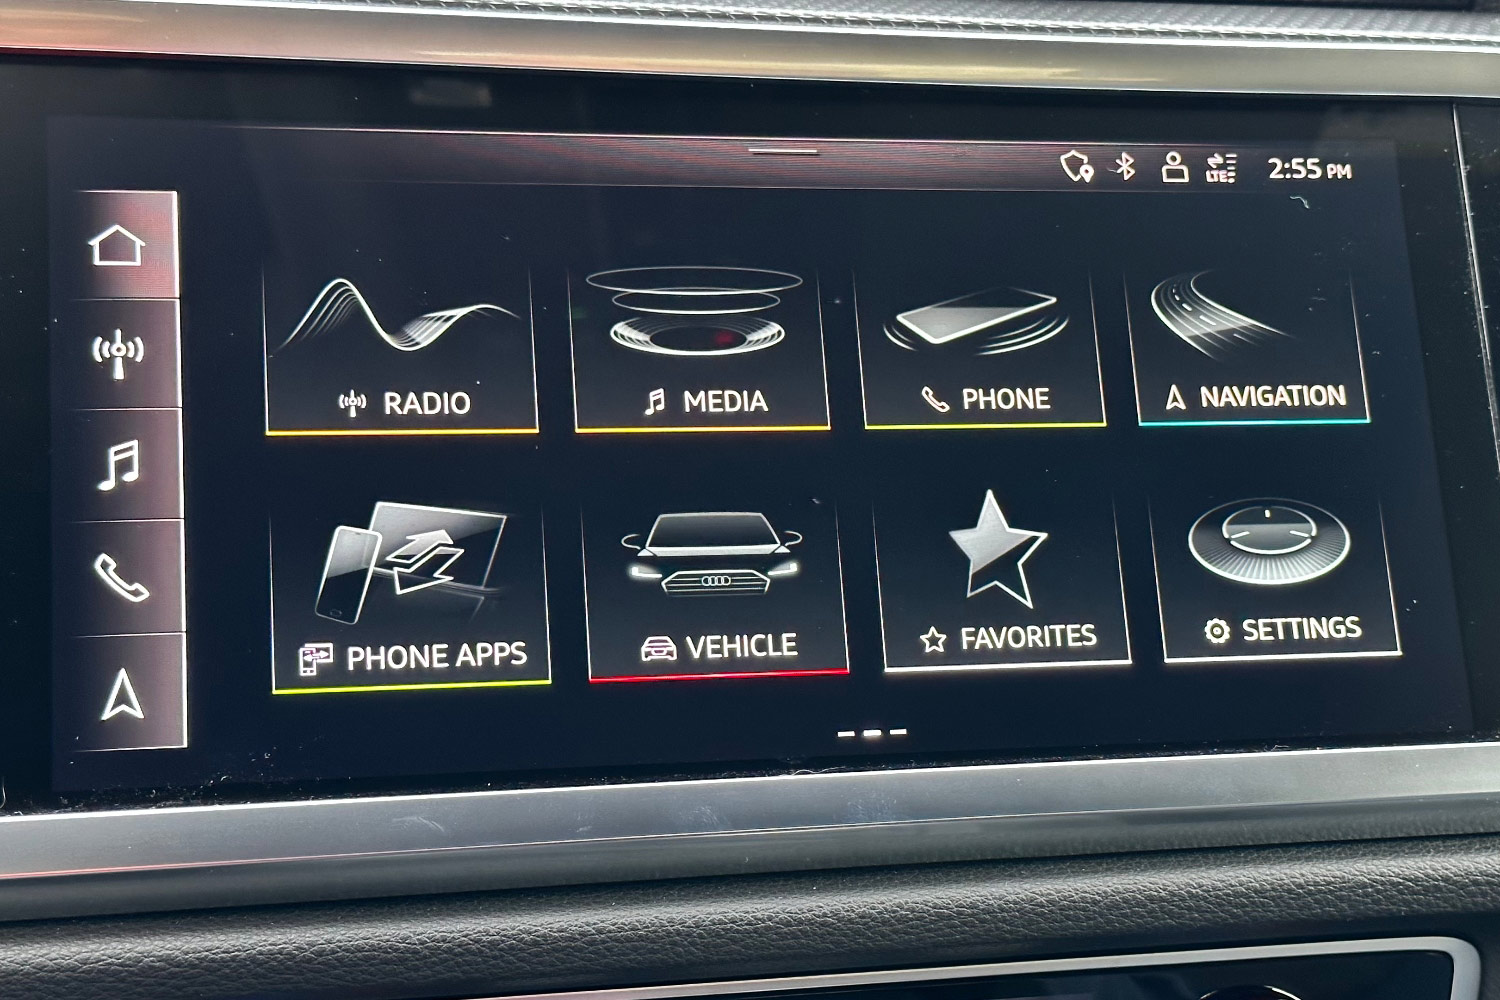 The infotainment screen of an Audi Q3.